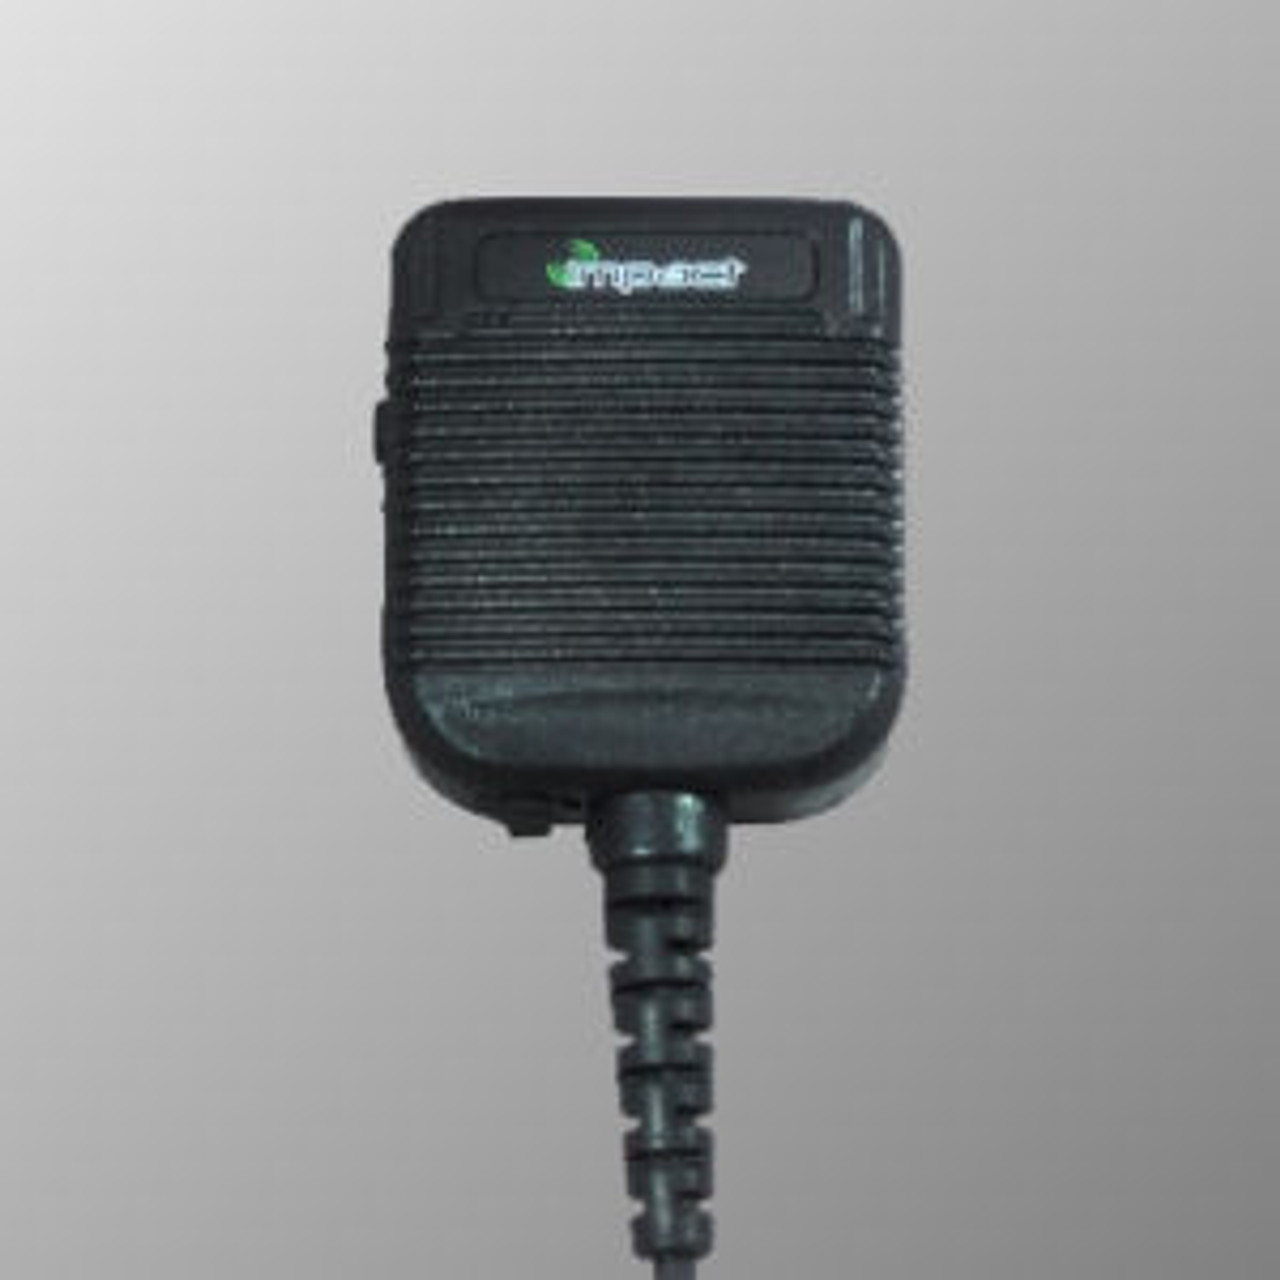 M/A-Com P5300 IP67 Ruggedized Speaker Mic.